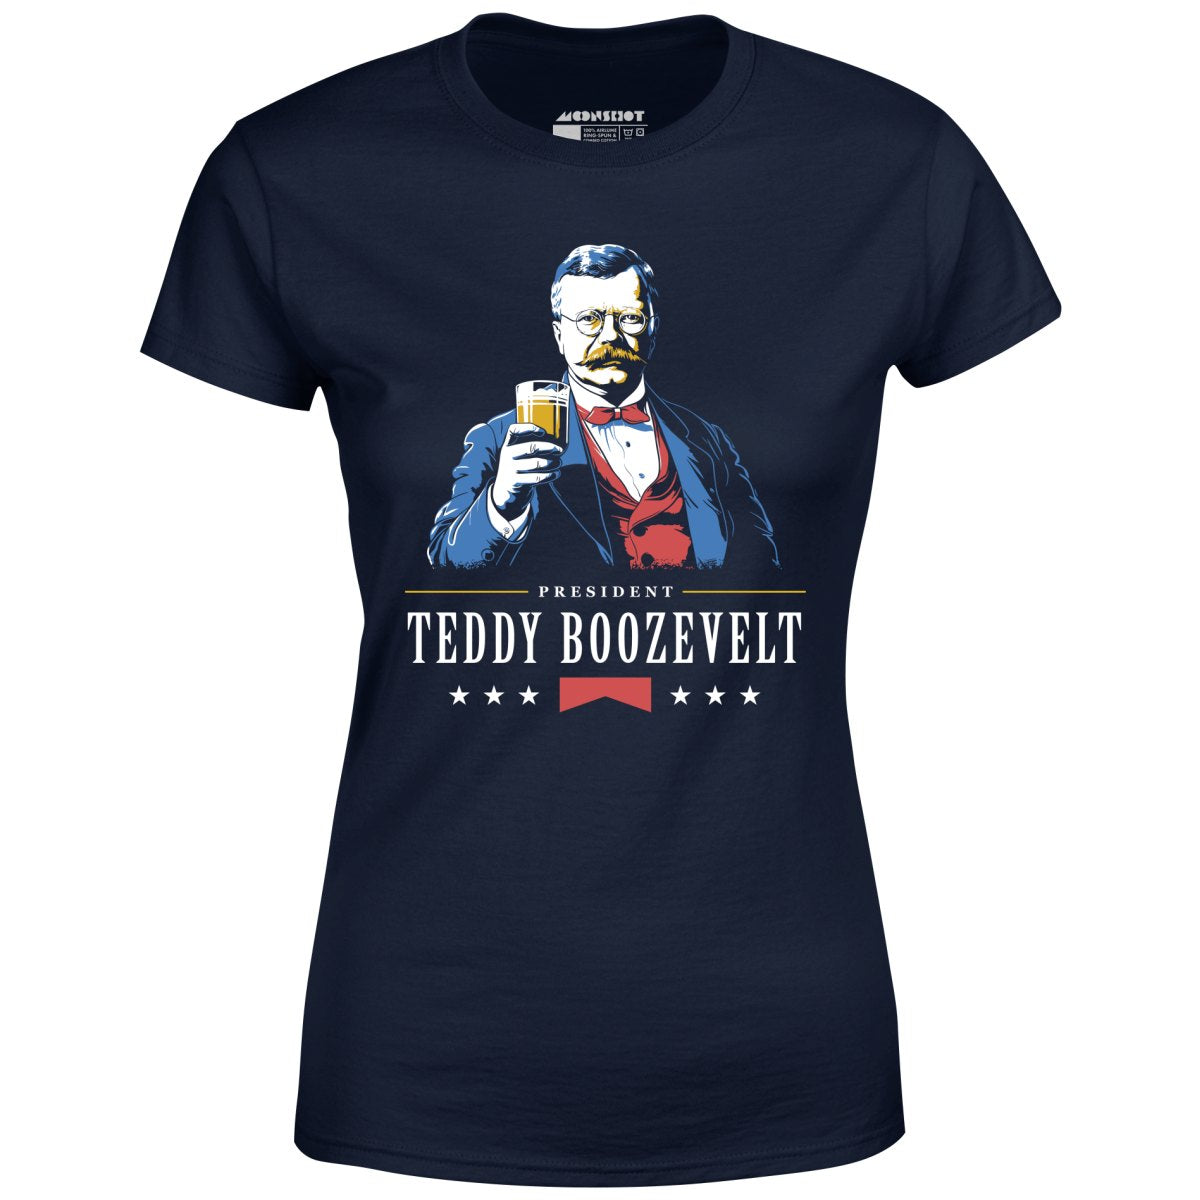 President Teddy Boozevelt - Women's T-Shirt